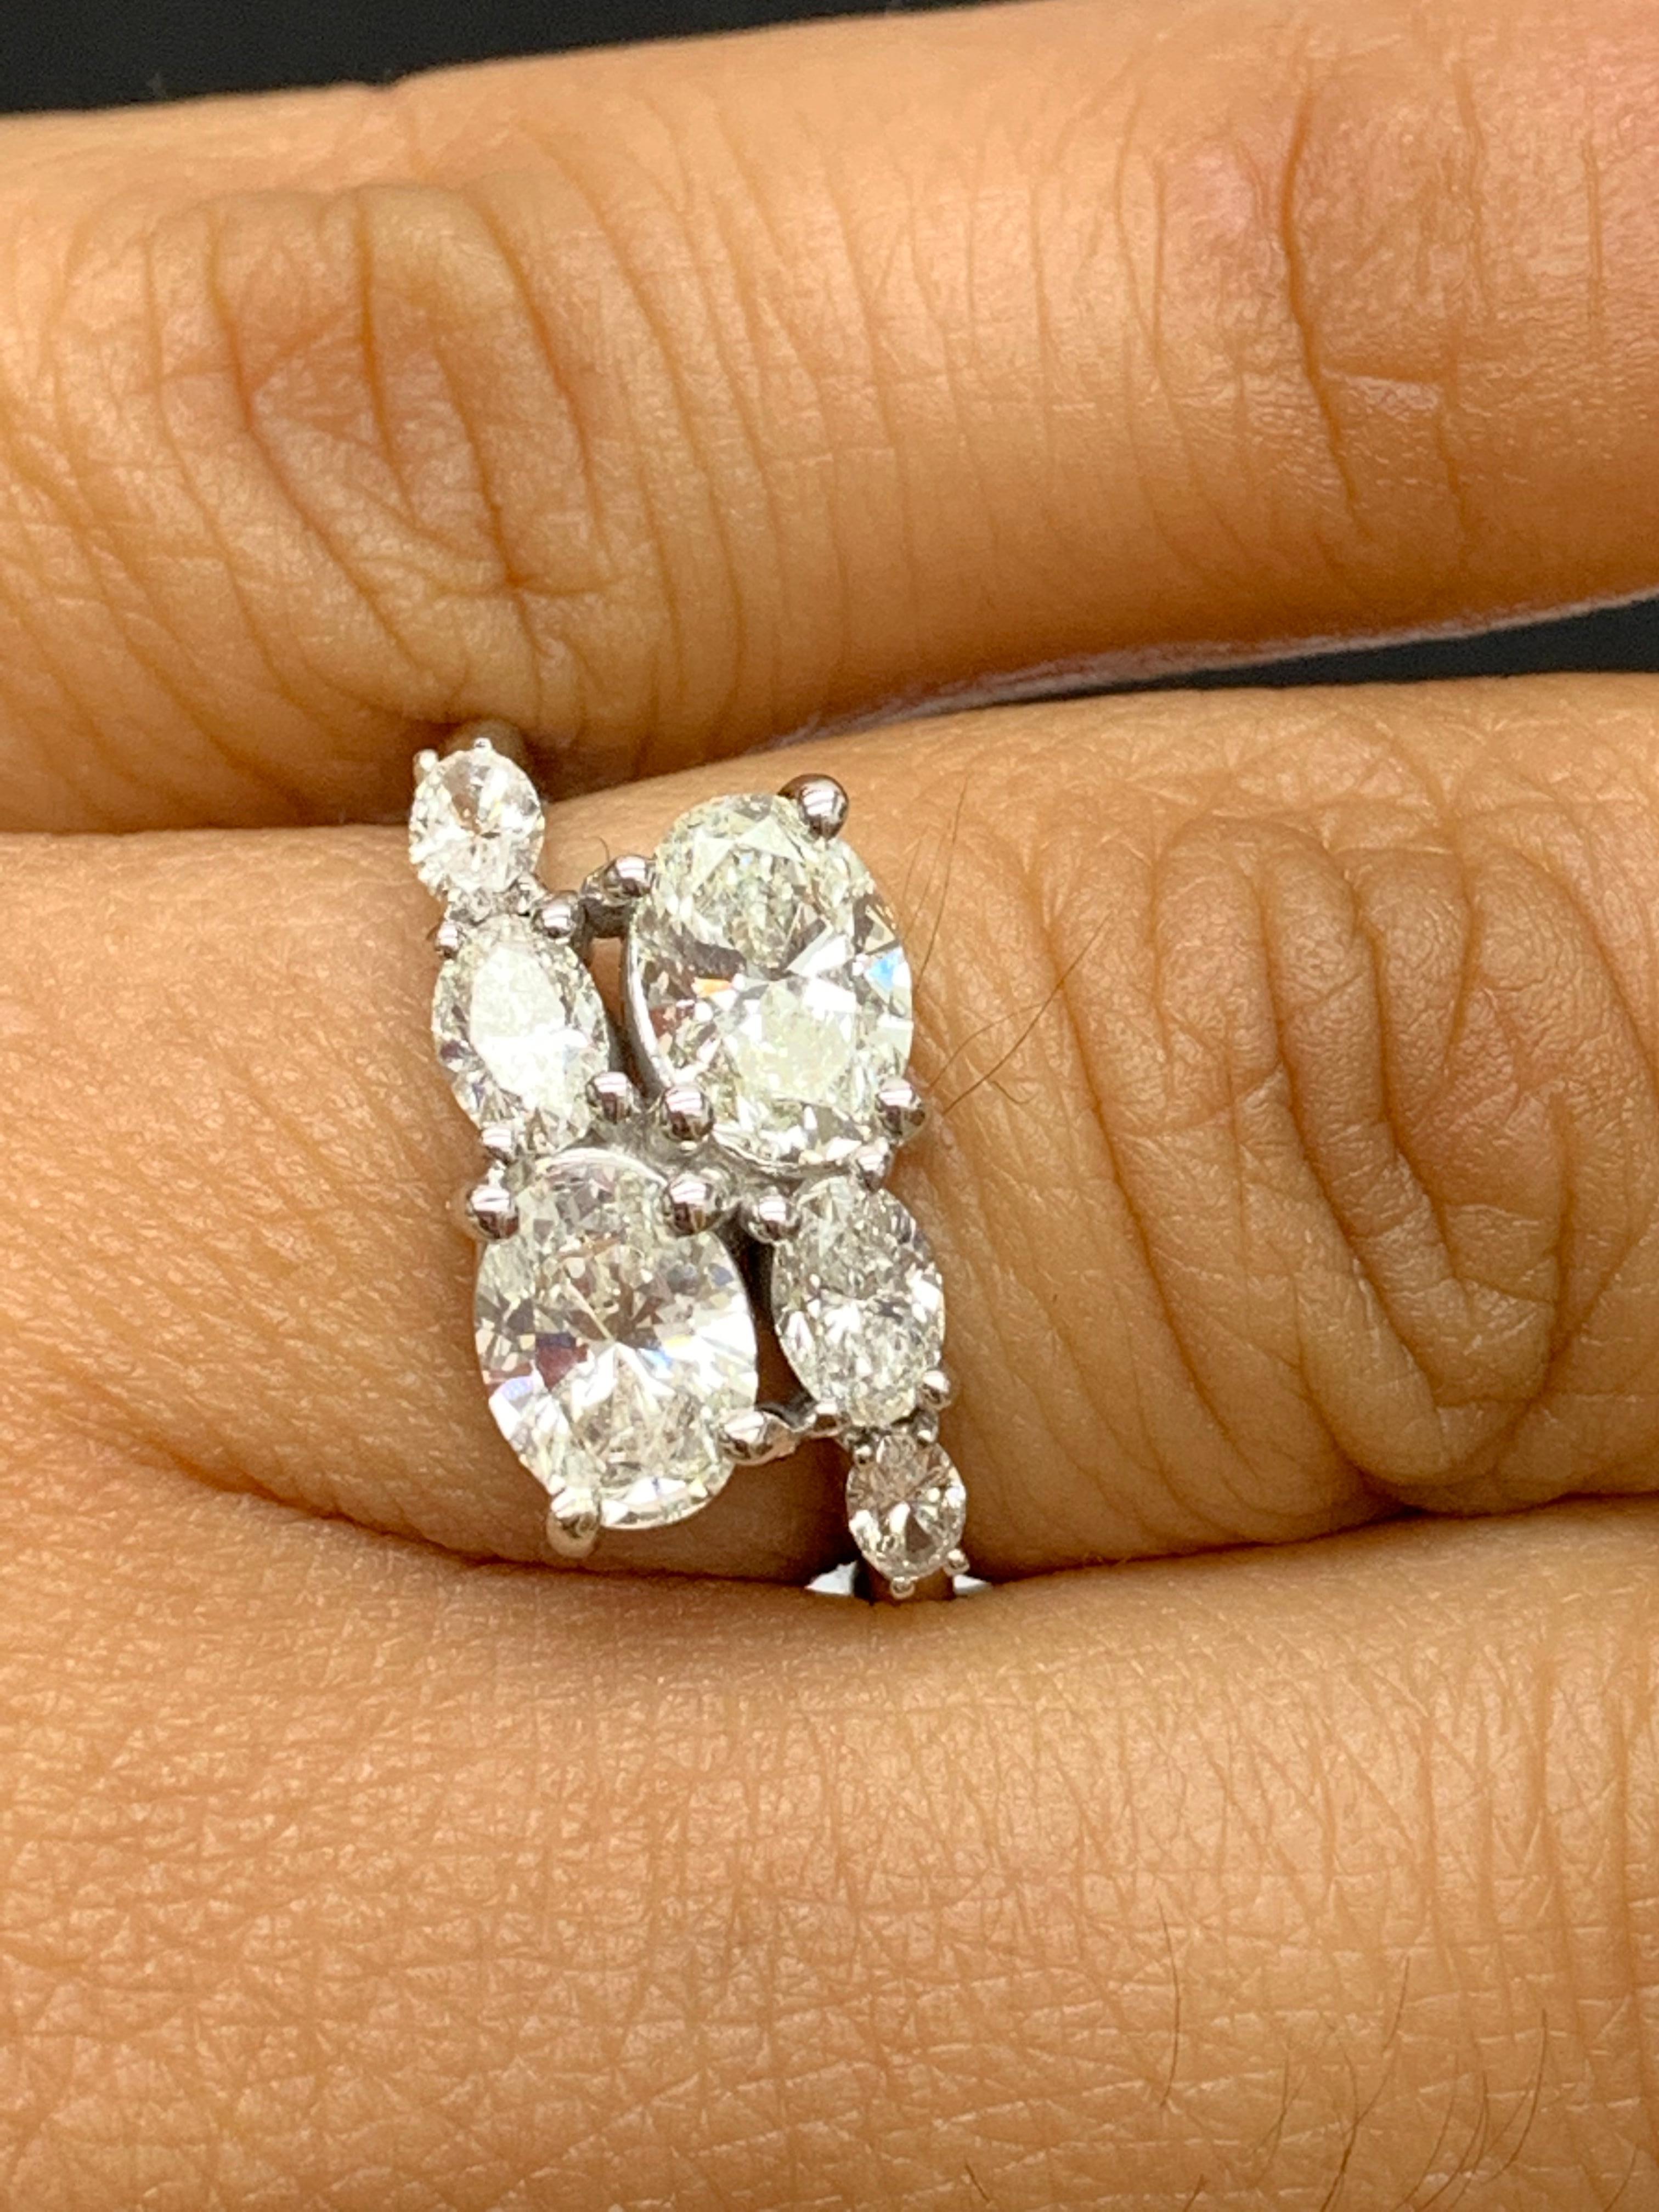 Women's 1.41 Carat Oval Cut Diamond Toi et Moi Engagement Ring in 14K White Gold For Sale